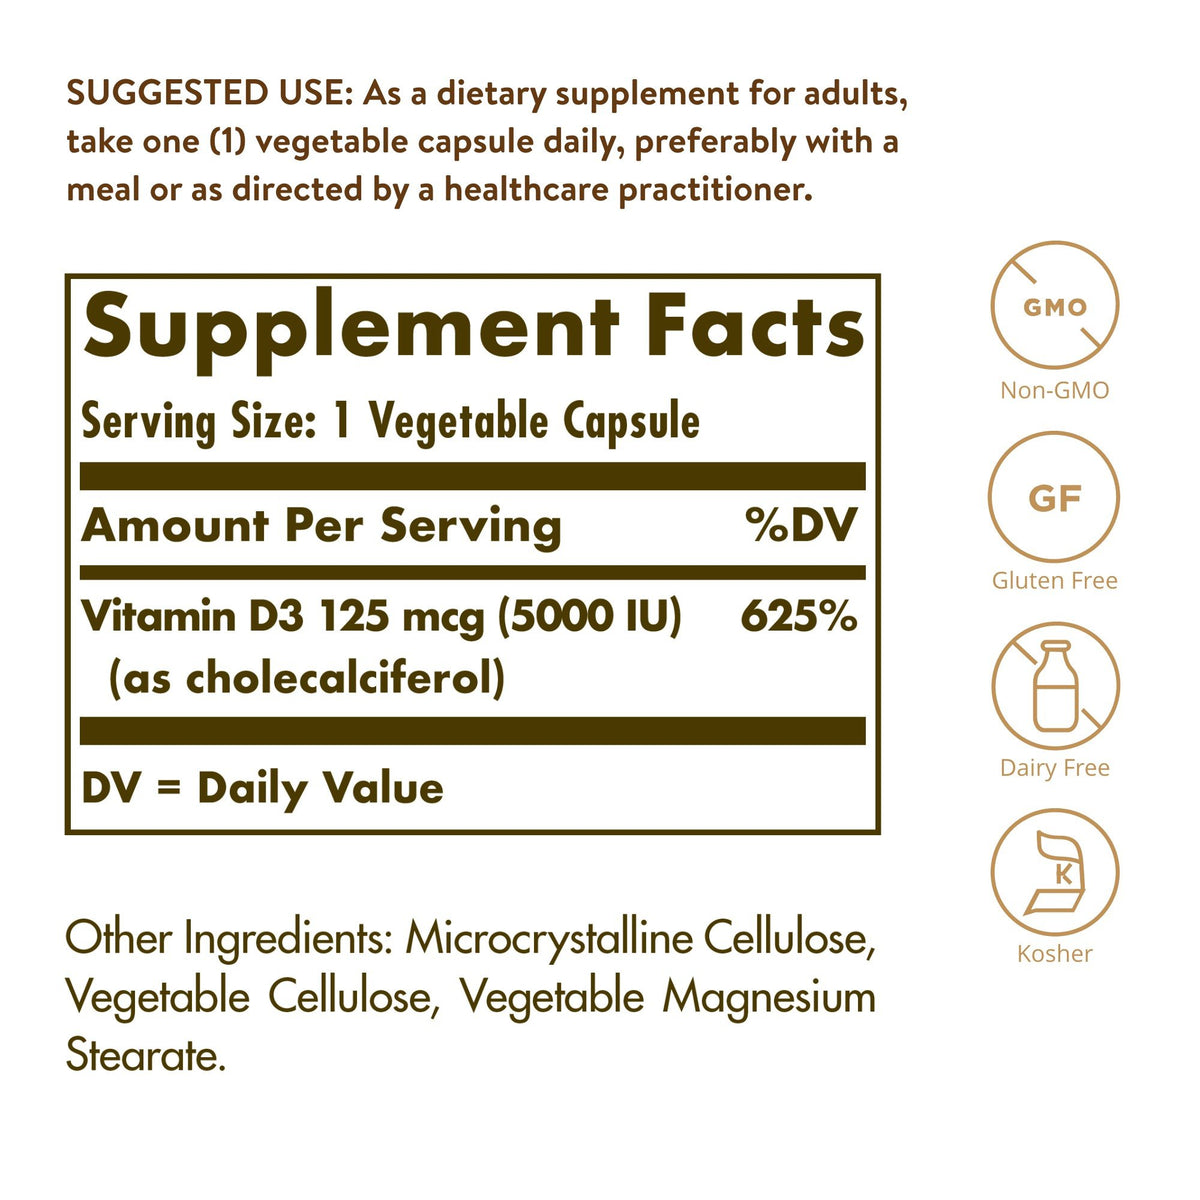 Solgar Vitamin D3 (Cholecalciferol) 125 mcg (5,000 IU) 60 VegCap